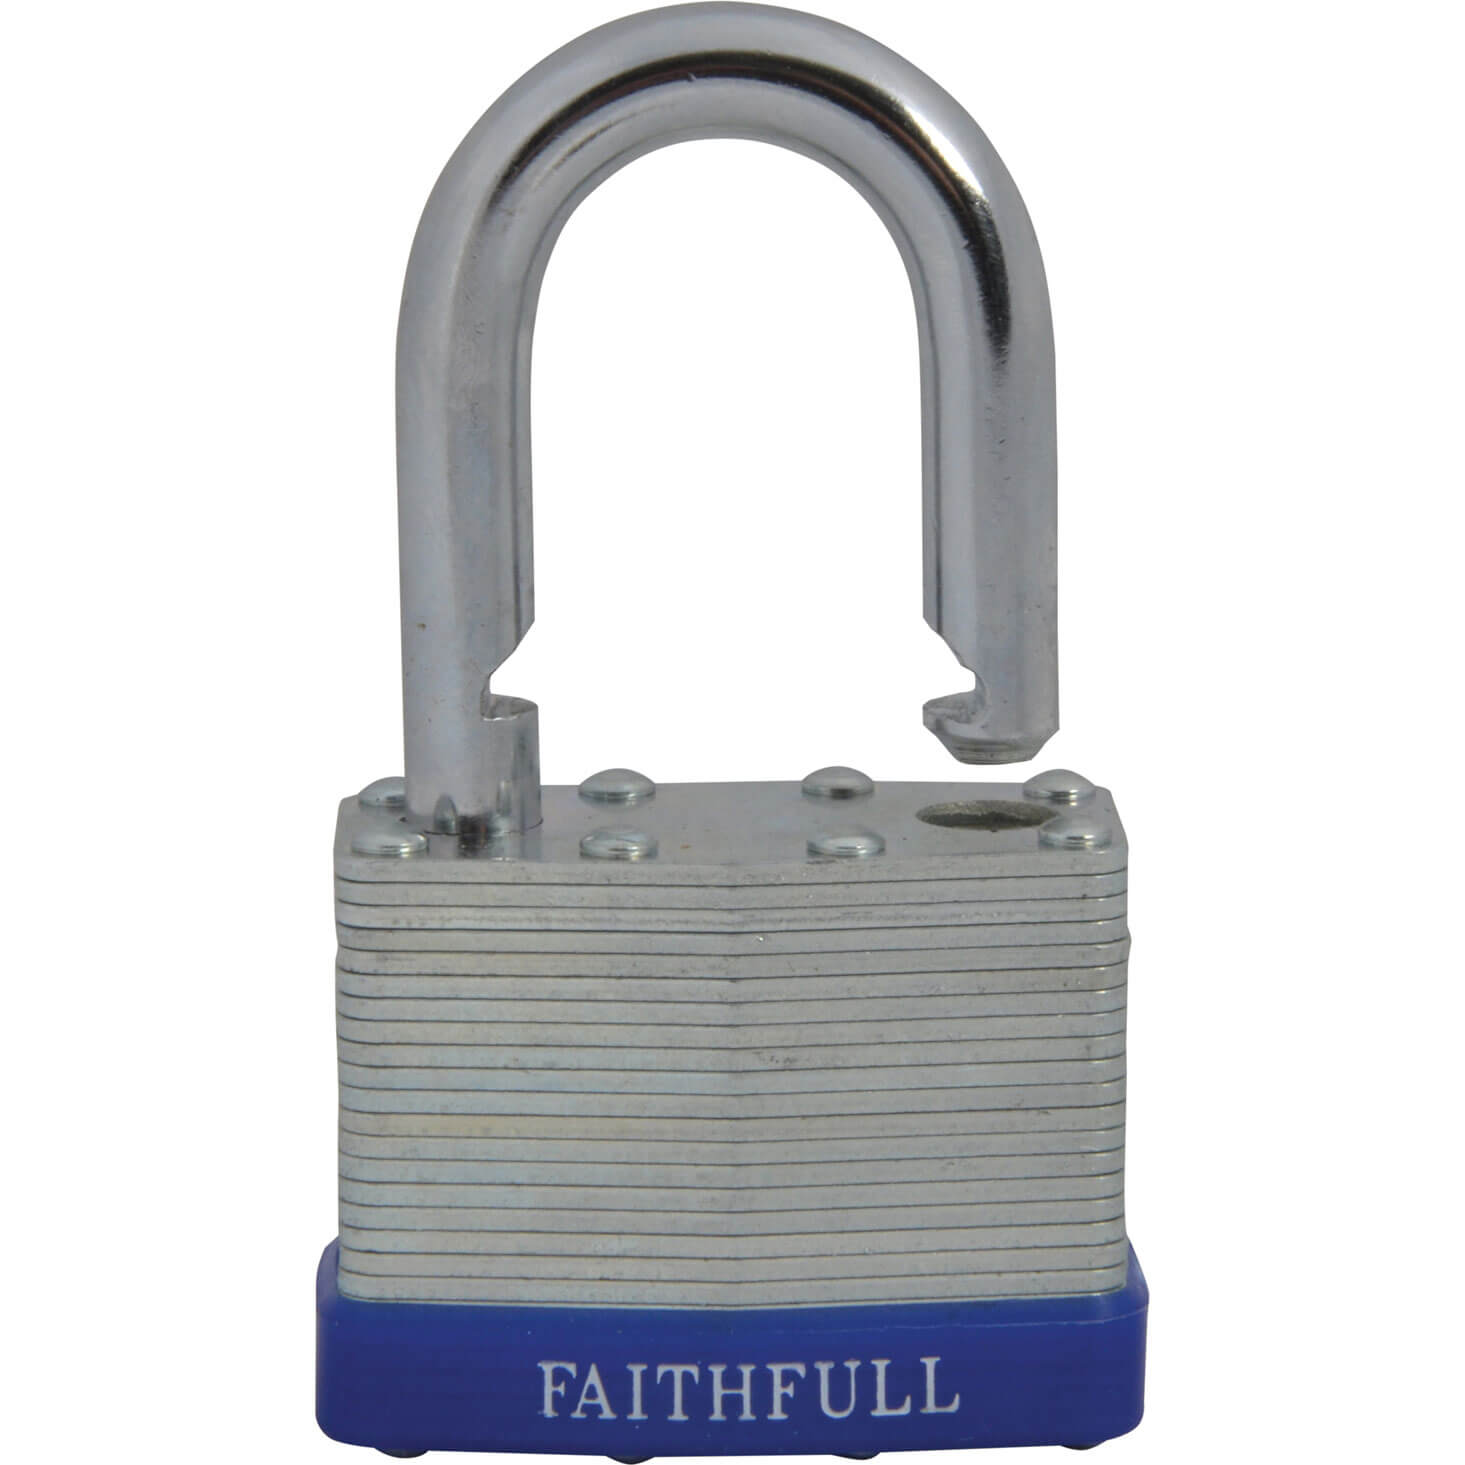 Image of Faithfull Laminated Steel Padlock 50mm Standard